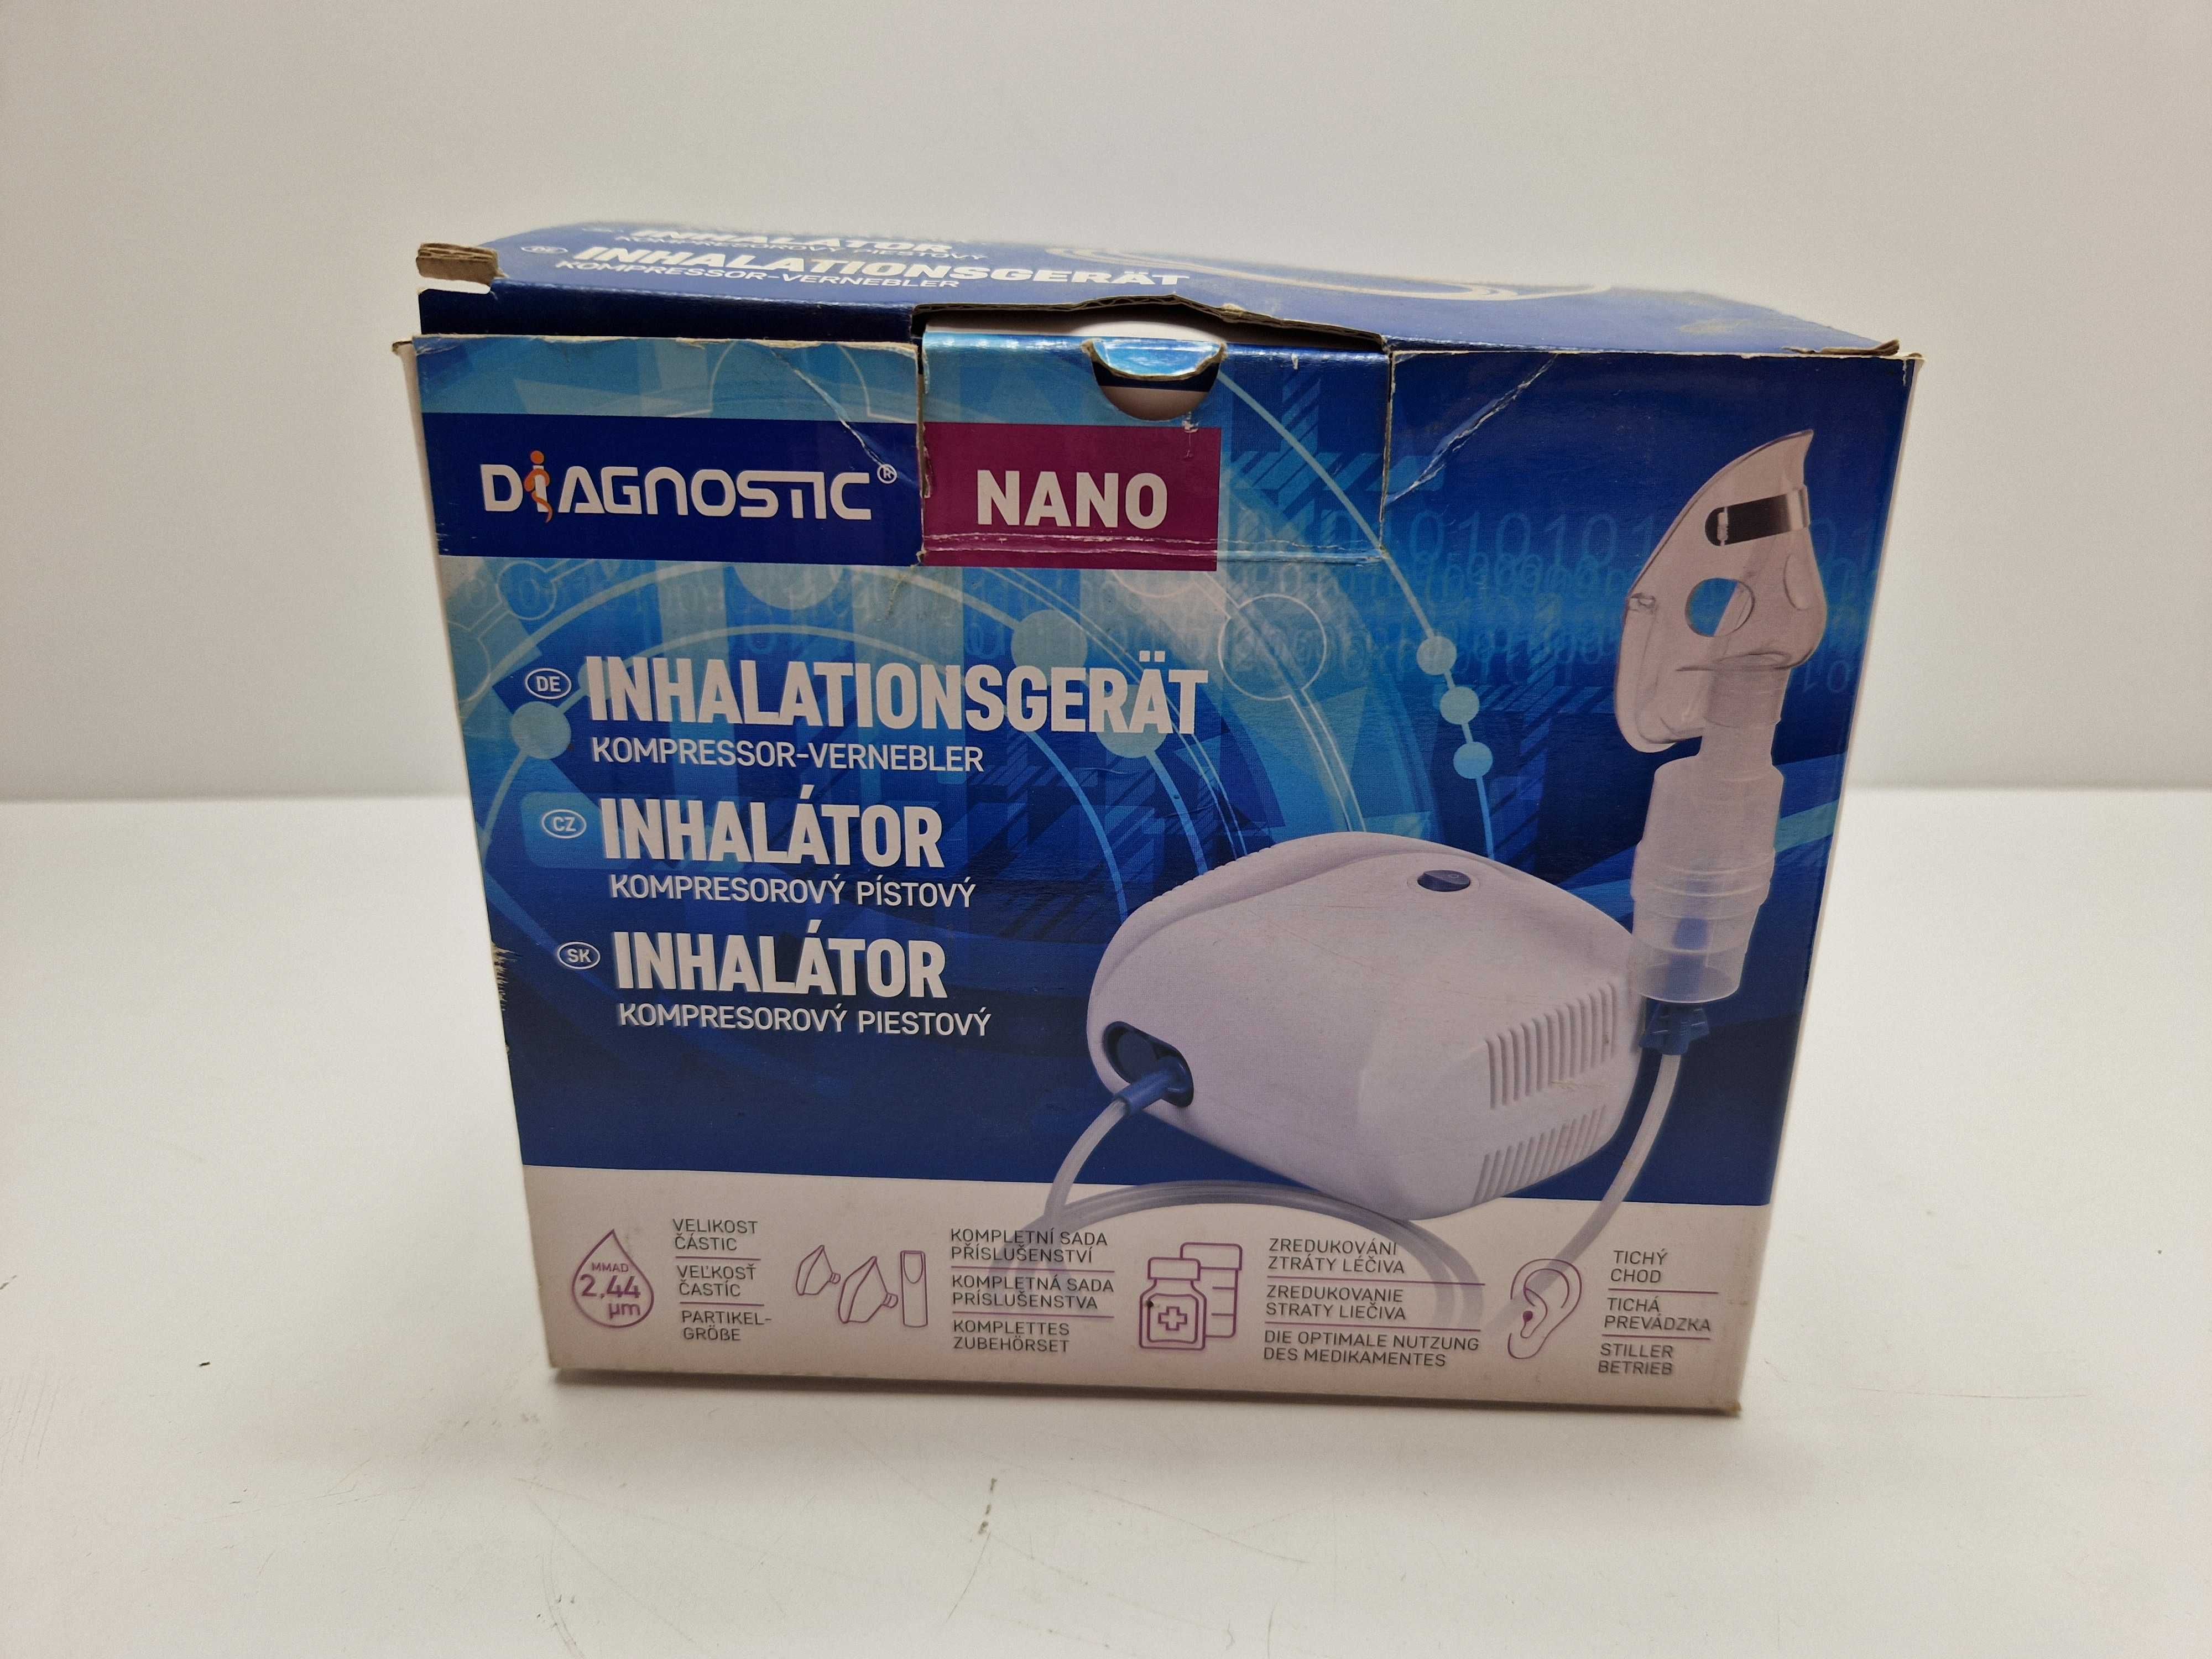 DIAGNOSTIC Nano Inhalator kompresorowy